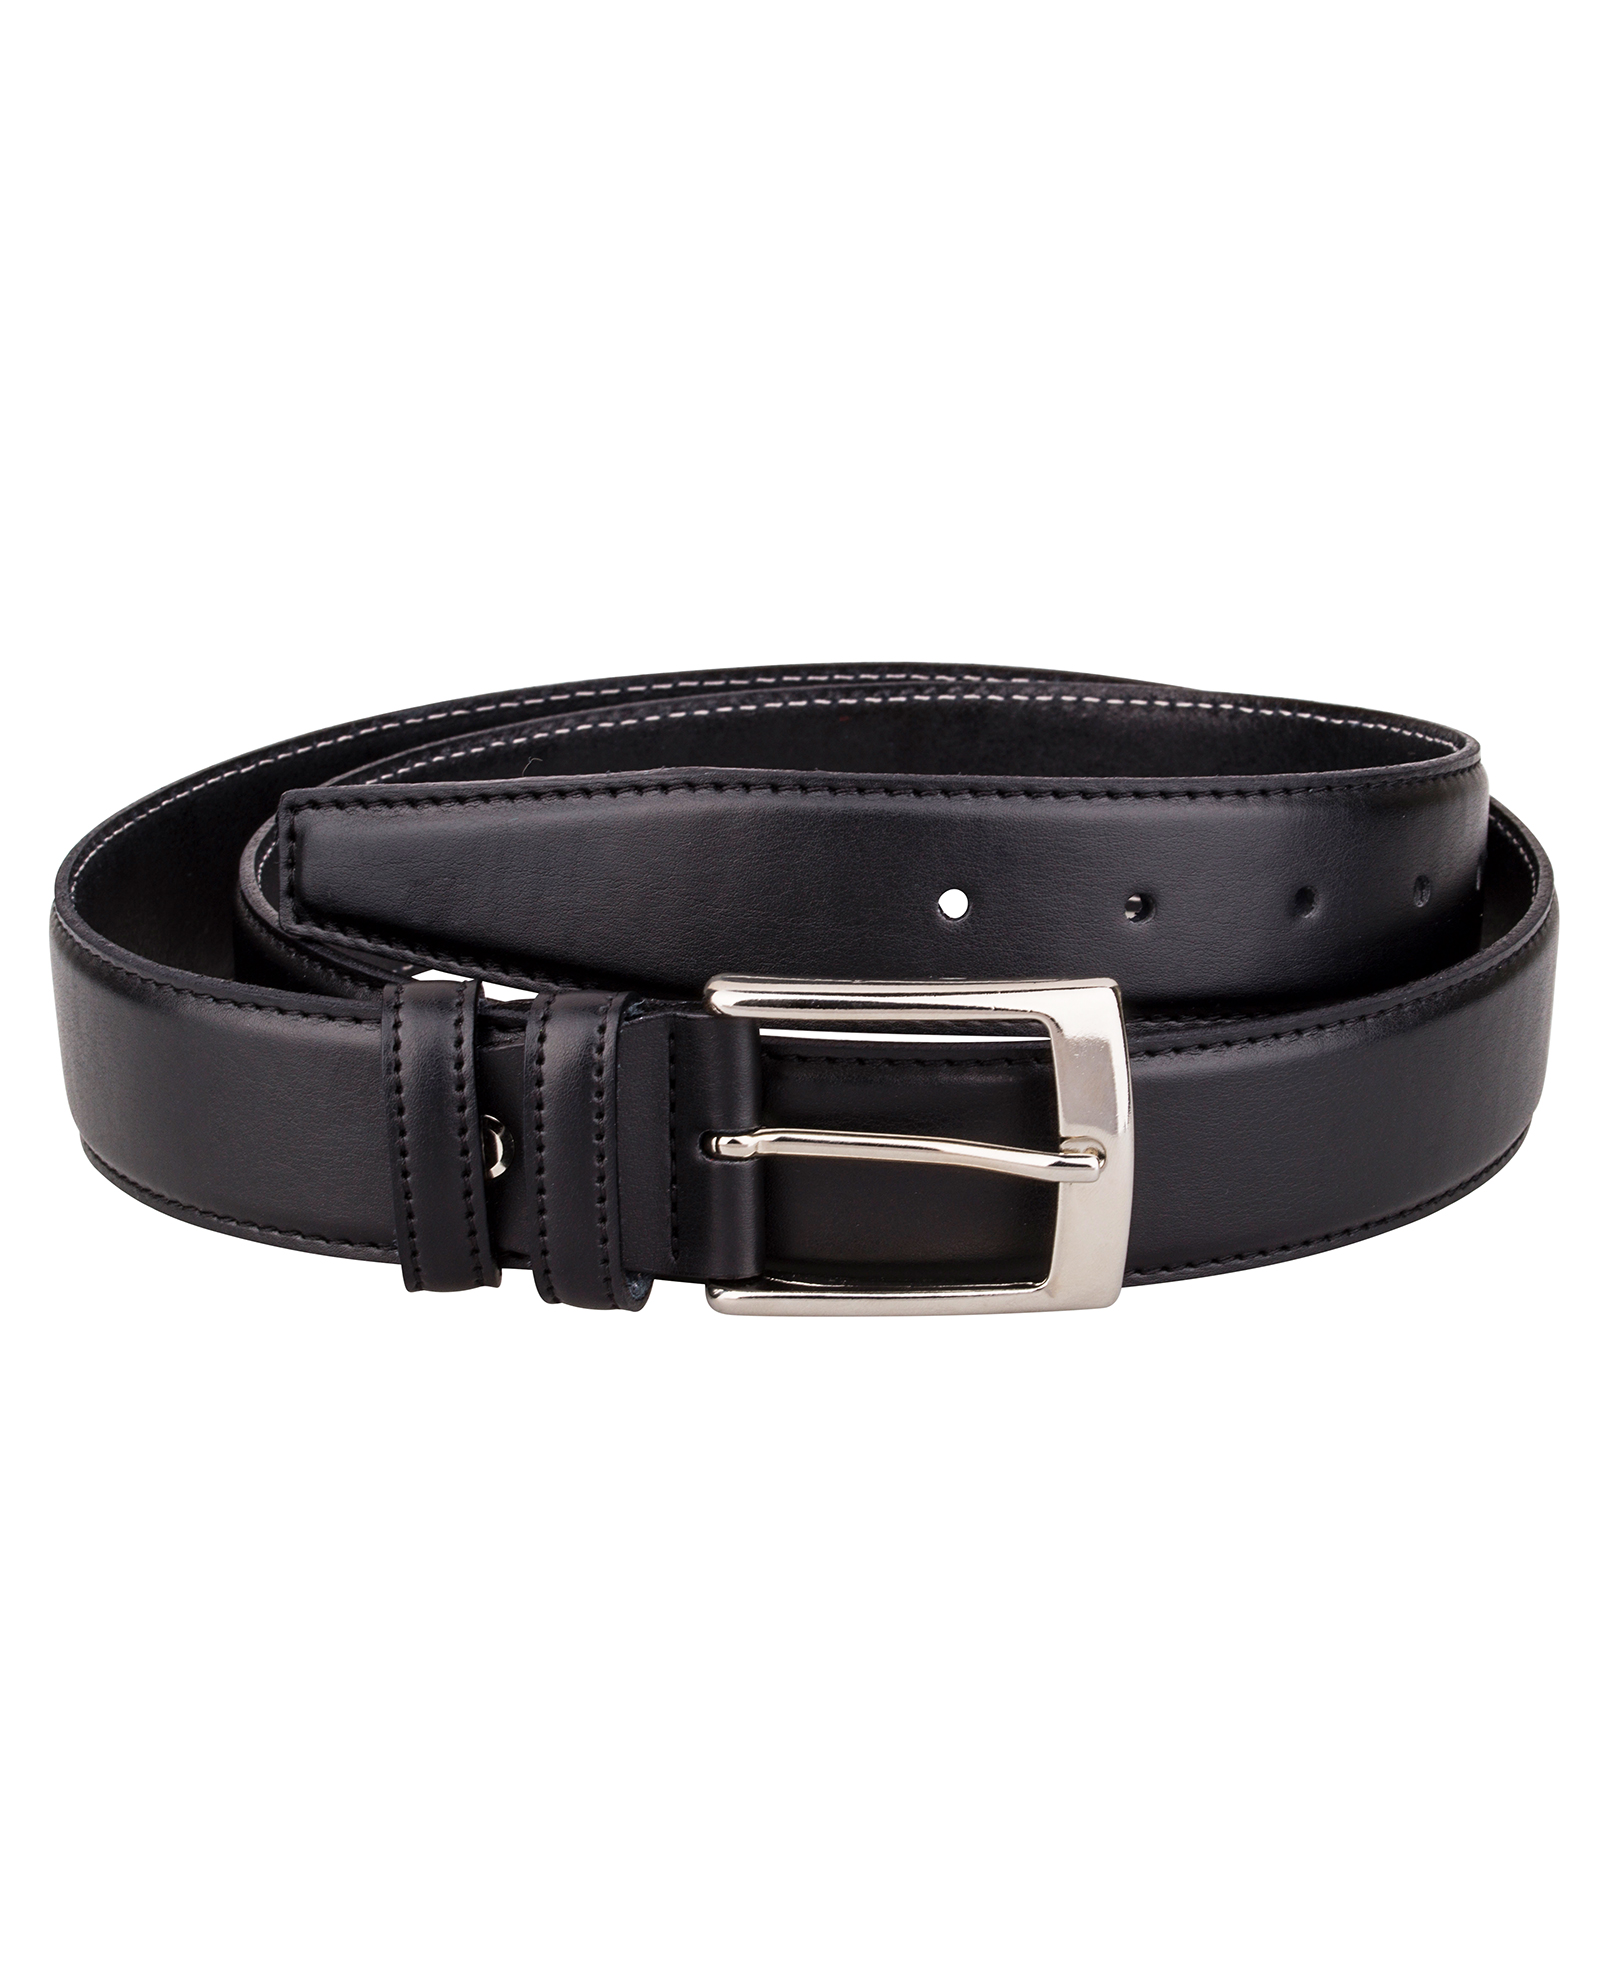 Buy Men's Black Leather Belt | LeatherBeltsOnline.com | Free Shipping